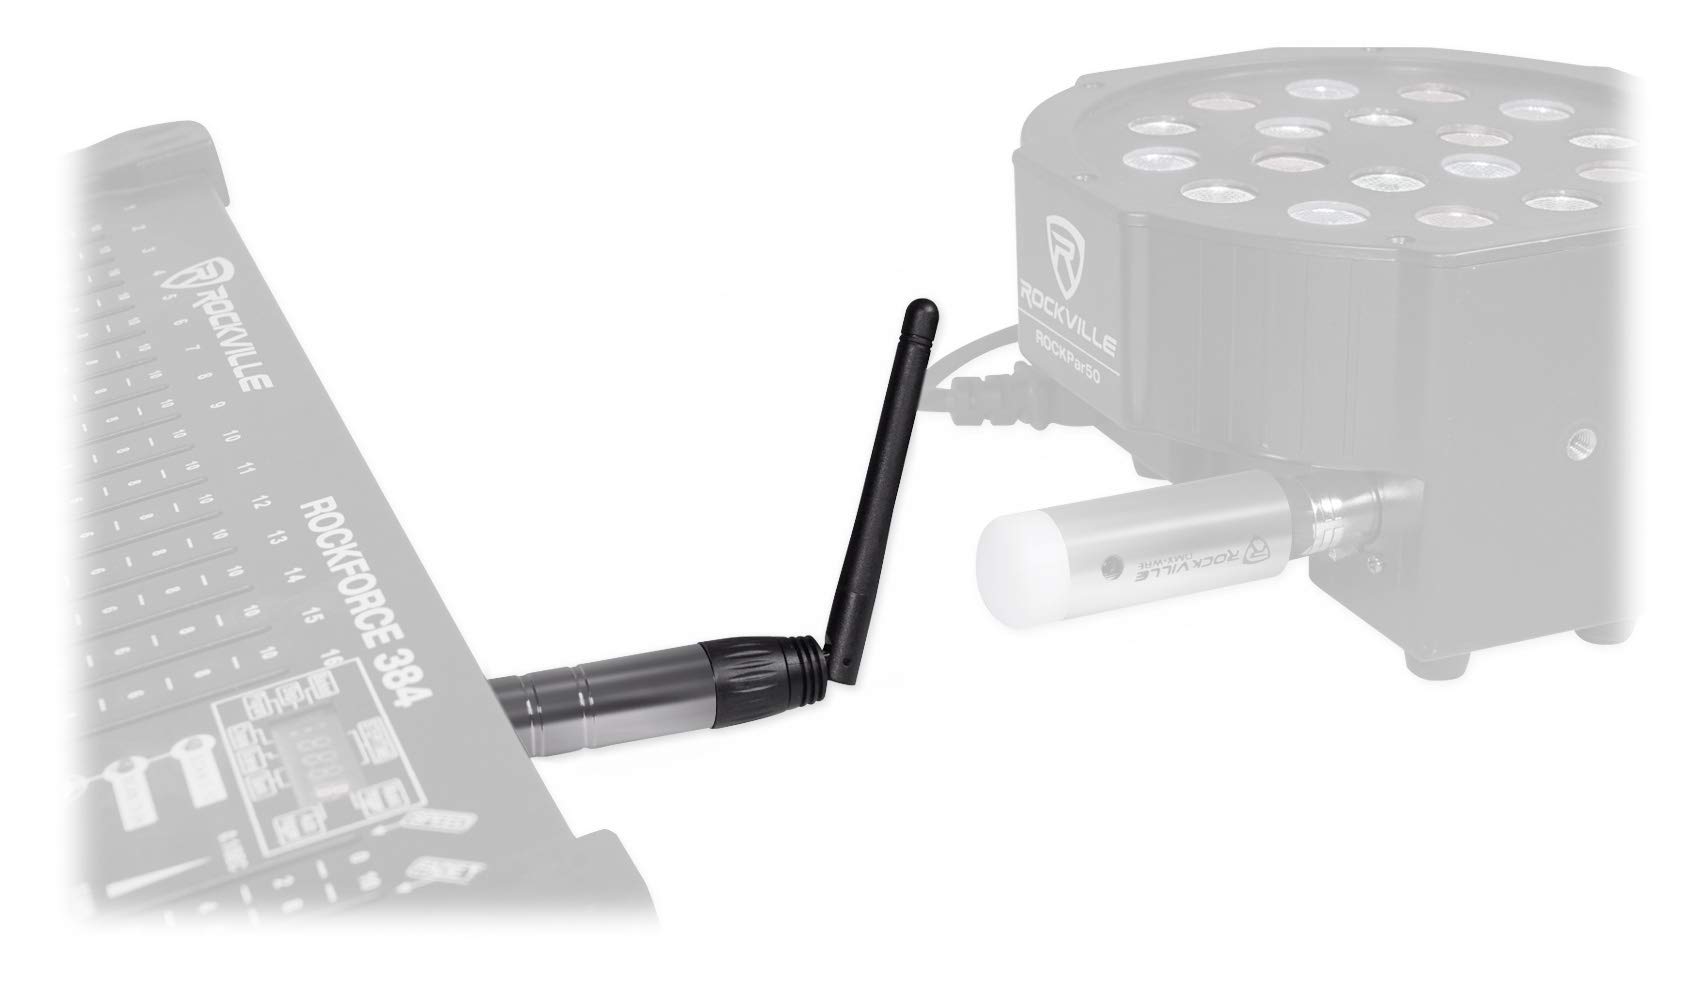 Rockville DMX-WTR Wireless DJ DMX Lighting Transmitter+8) Rechargeable Receivers